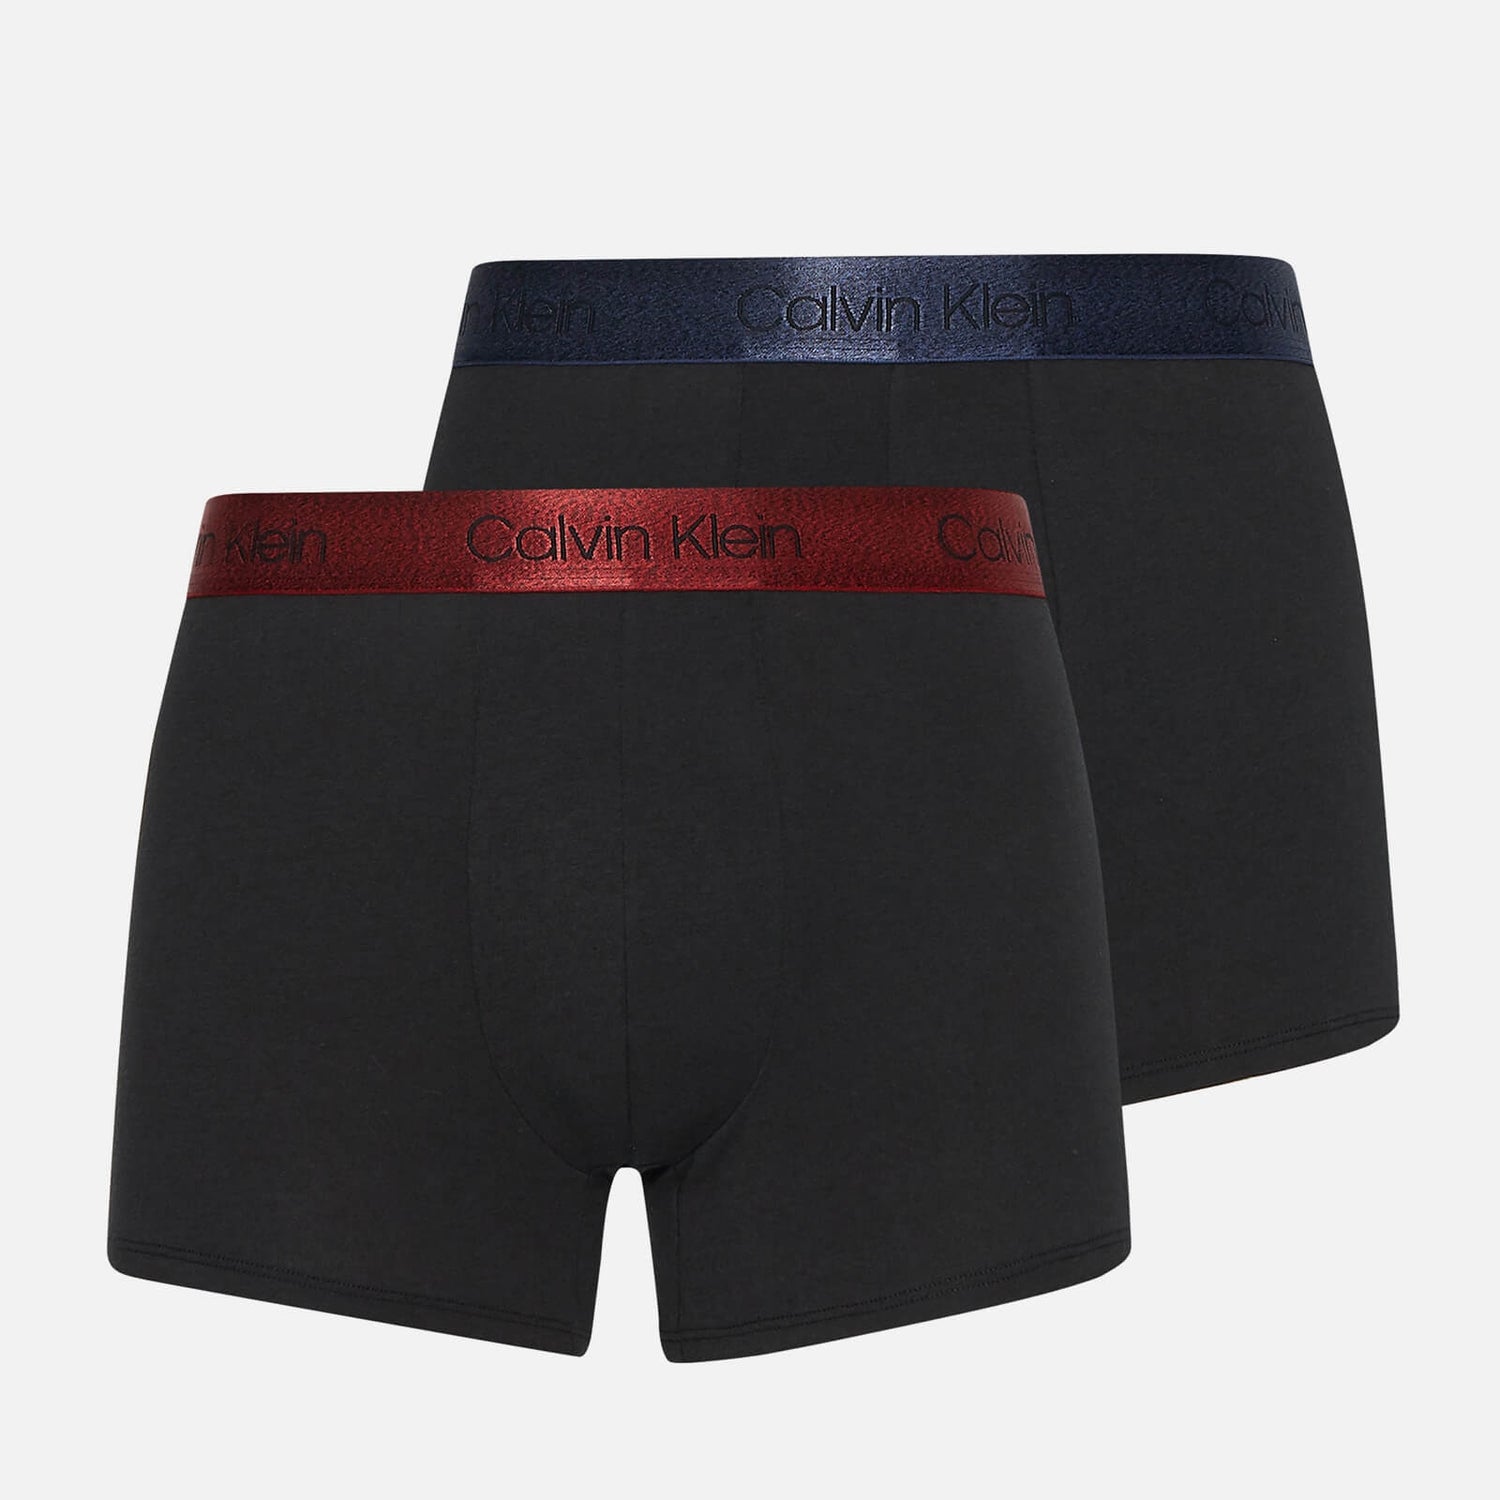 Calvin Klein Men's 2 Pack Trunk Boxers - Black/rustic red/blue shadow - S